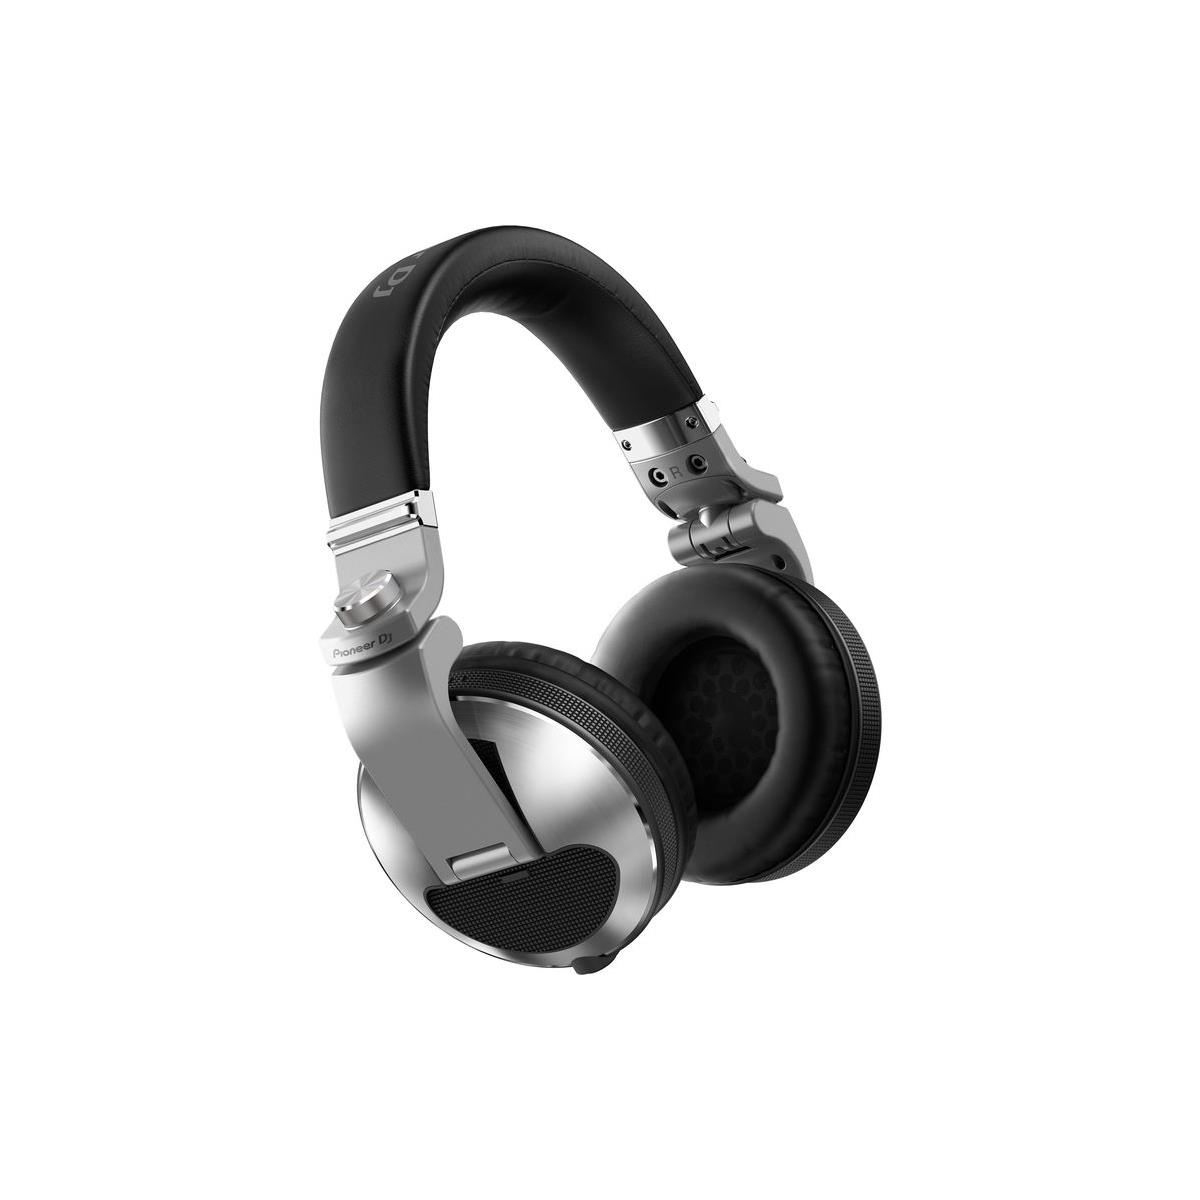 Image of Pioneer Electronics HDJ-X10 Professional Over-Ear DJ Headphones